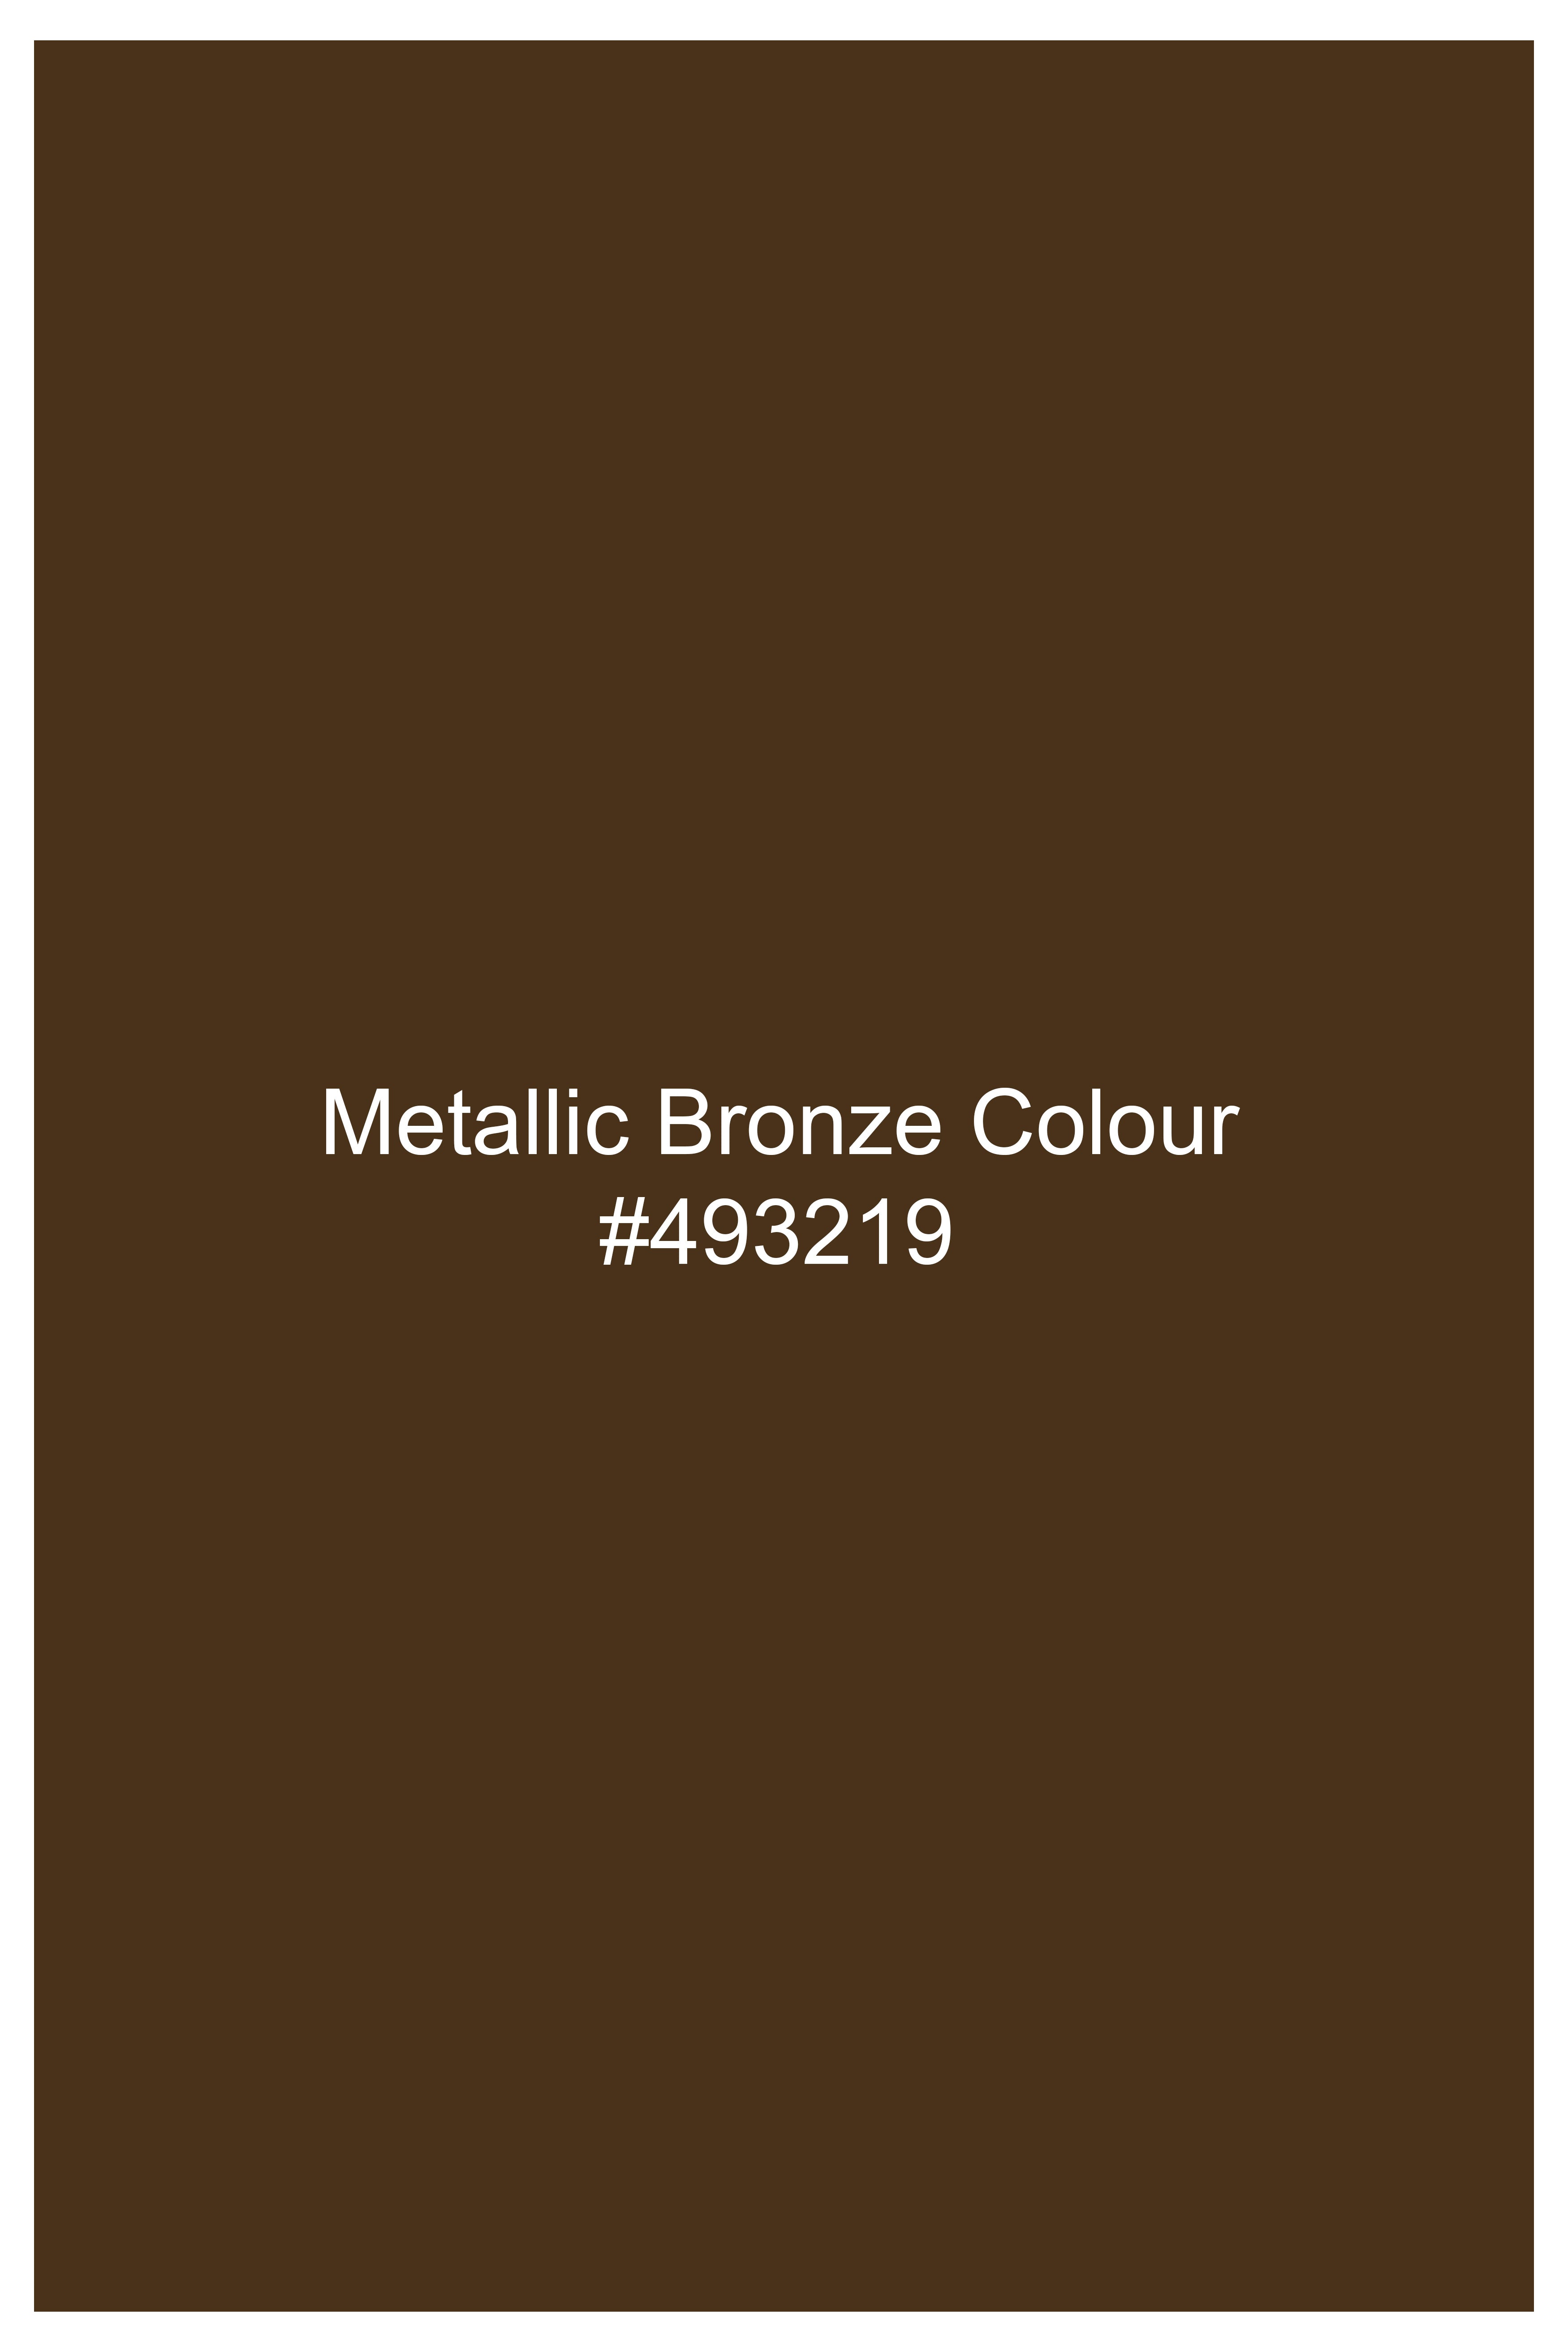 Metallic Bronze Brown Premium Cotton Tuxedo Stretchable Traveler Suit ST2782-BKL-36,ST2782-BKL-38,ST2782-BKL-40,ST2782-BKL-42,ST2782-BKL-44,ST2782-BKL-46,ST2782-BKL-48,ST2782-BKL-50,ST2782-BKL-52,ST2782-BKL-54,ST2782-BKL-56,ST2782-BKL-58,ST2782-BKL-60